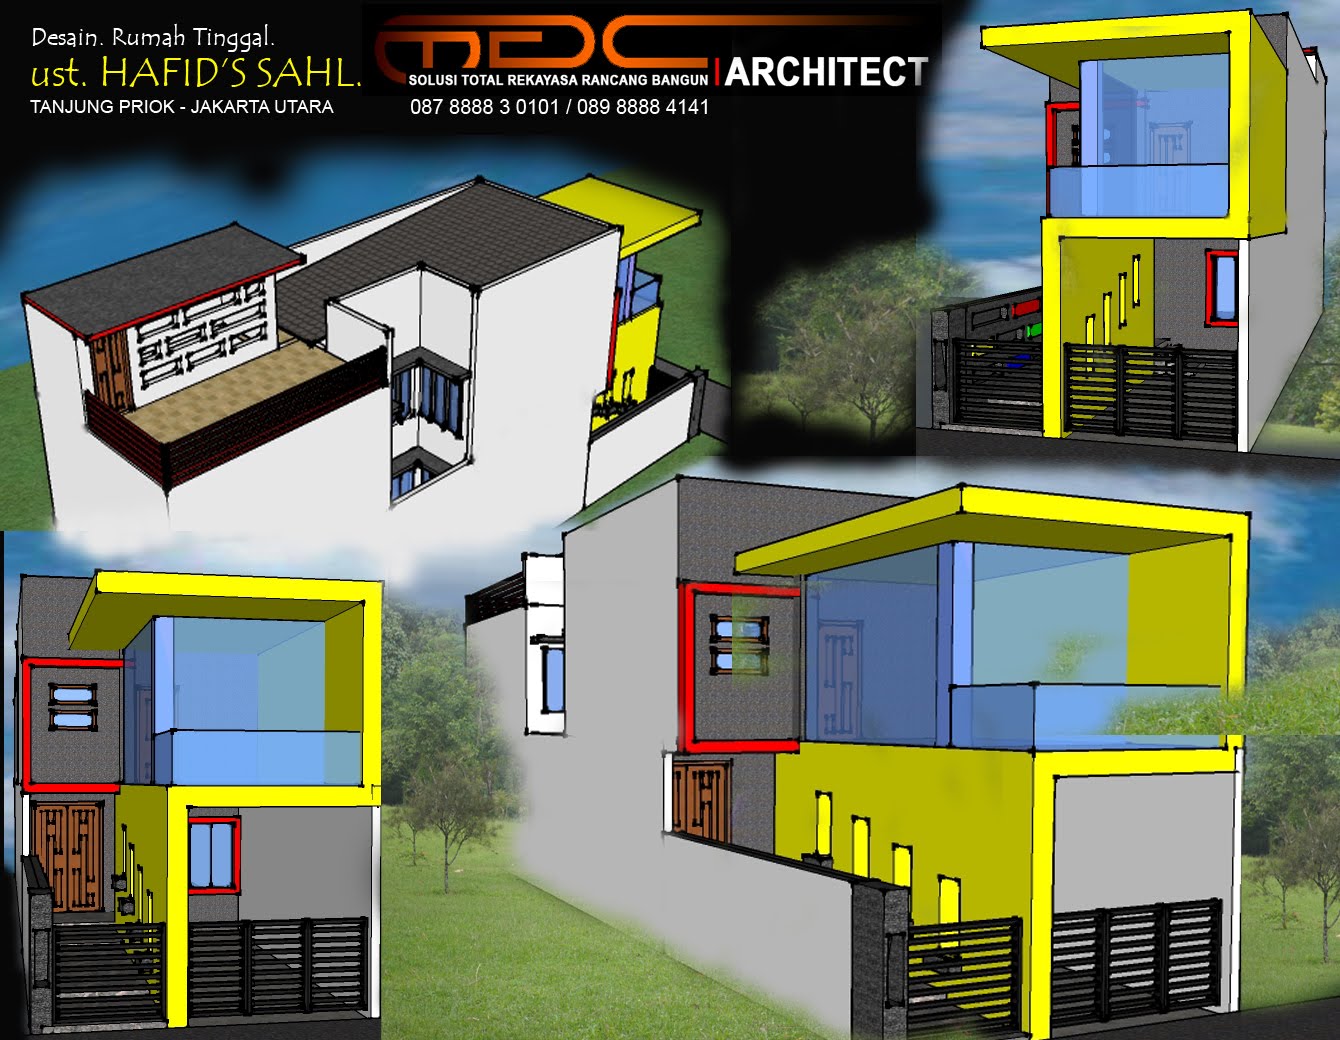 MDC Architect